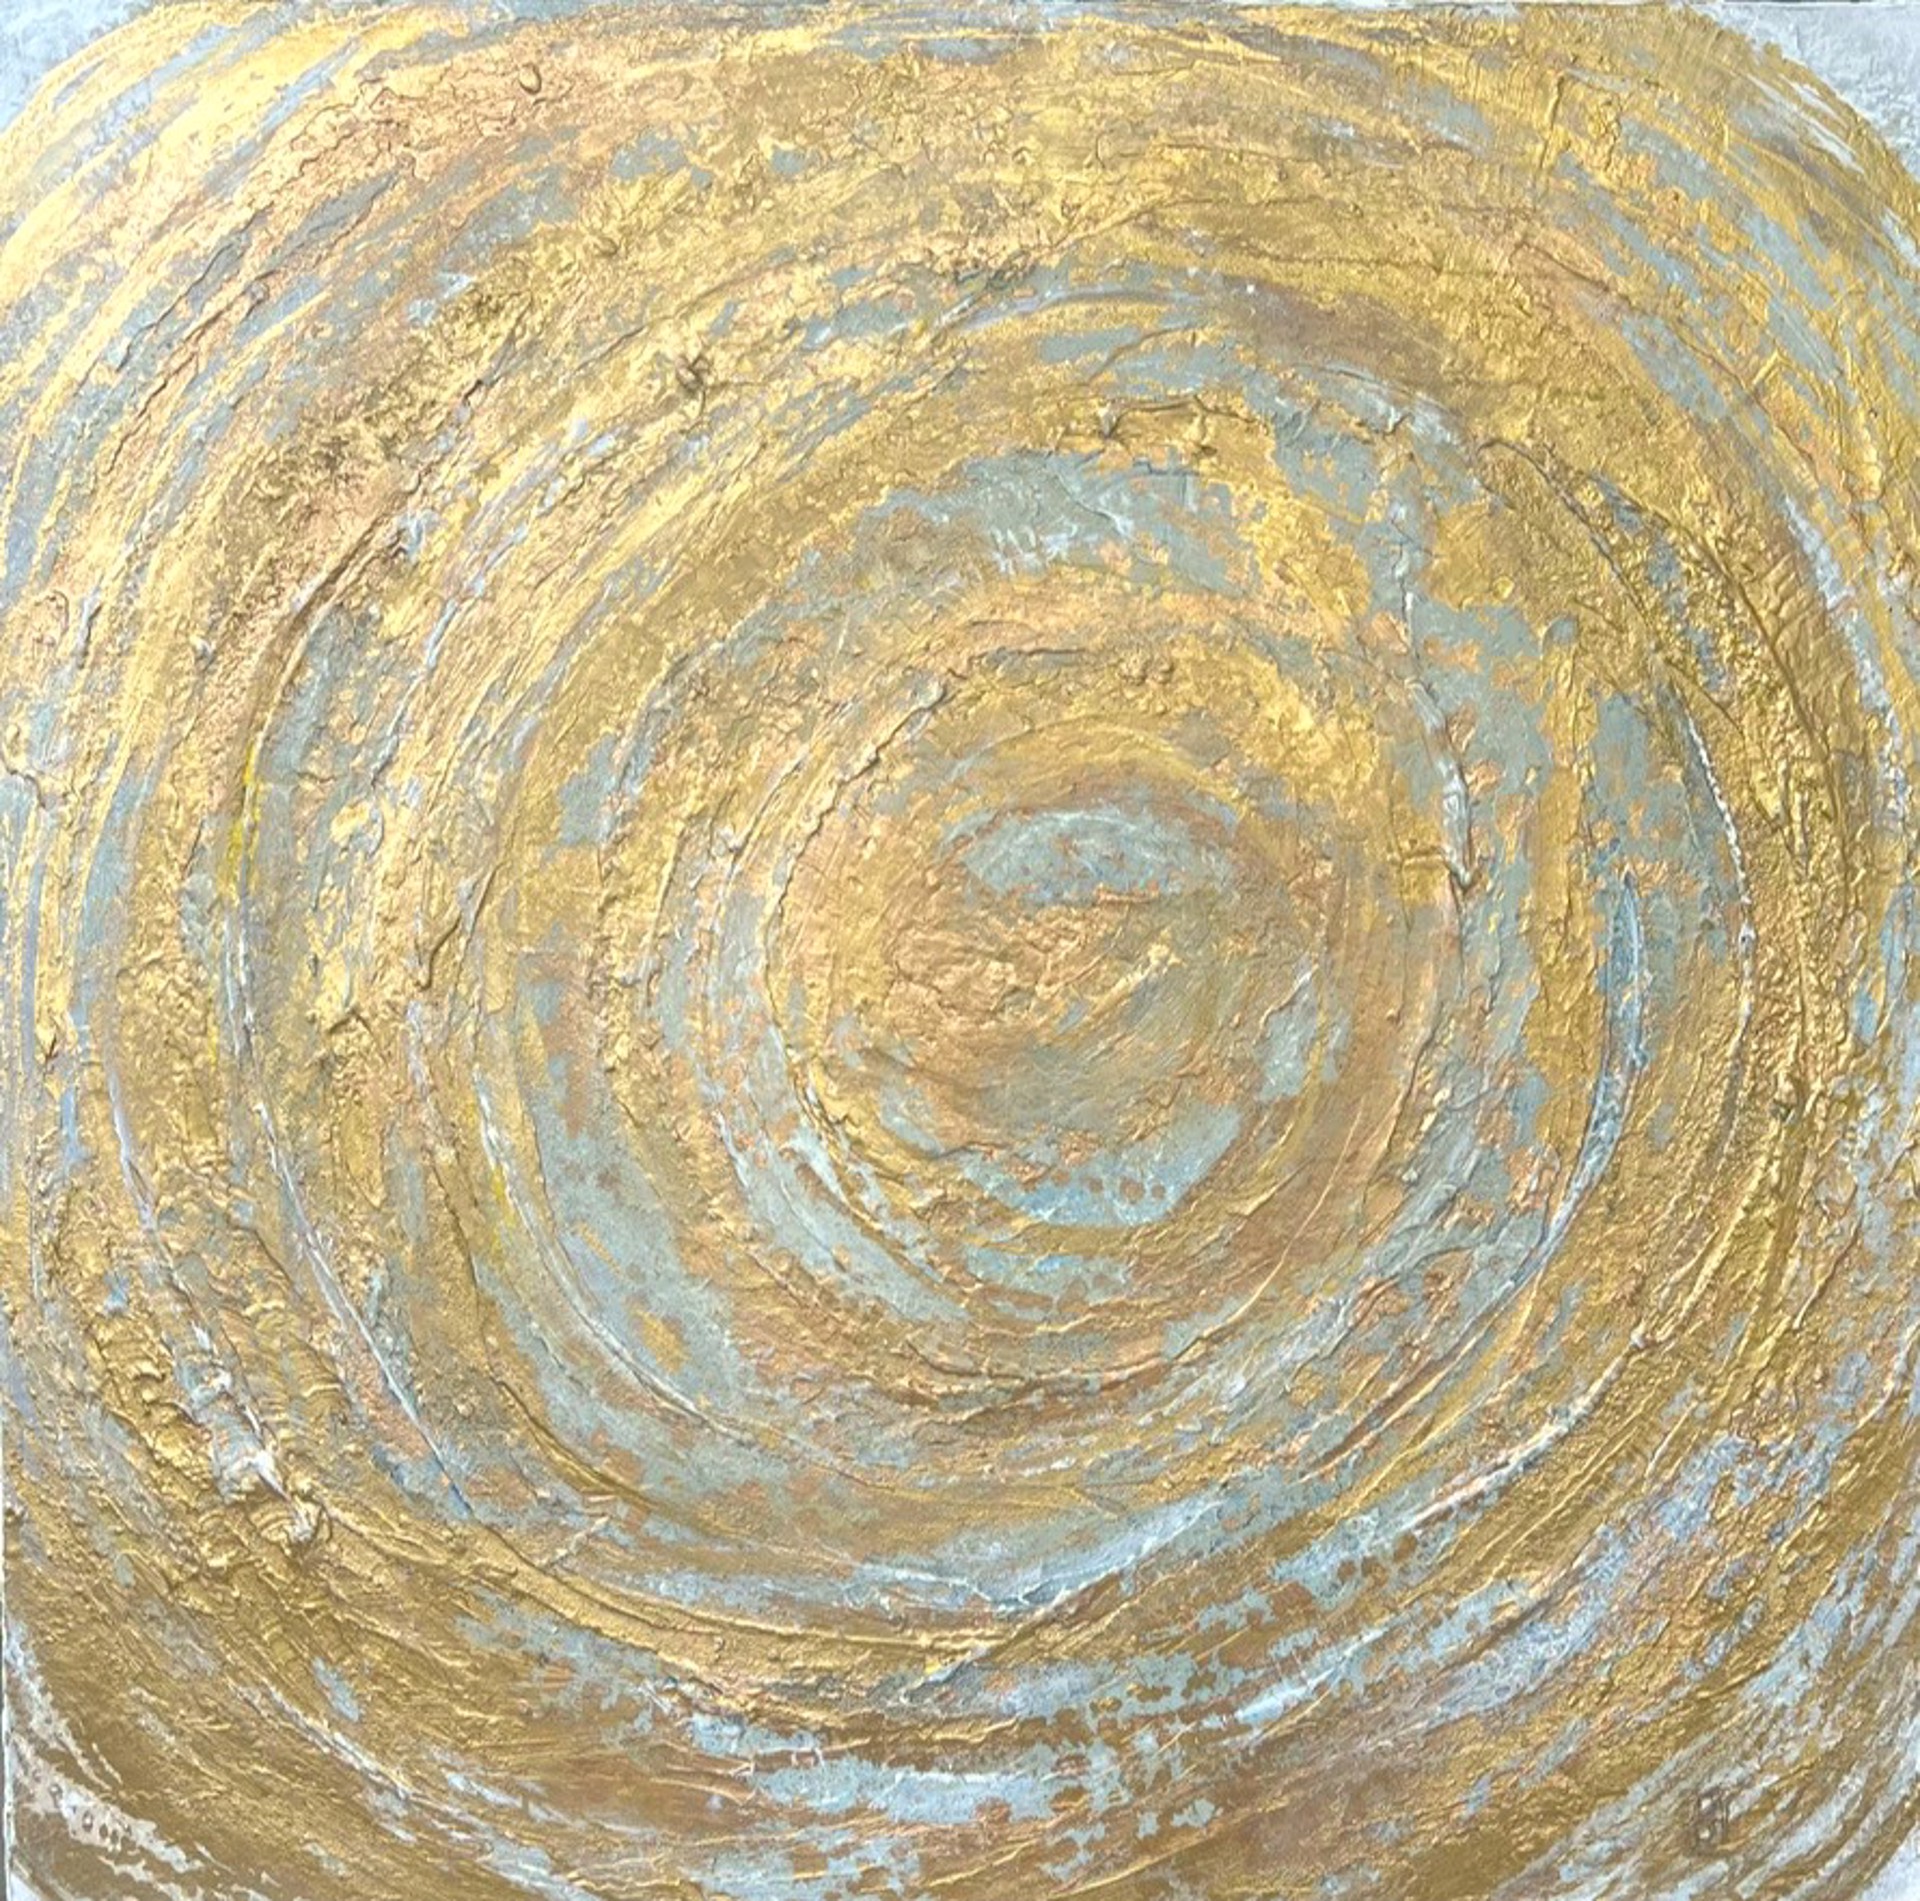 Gold Hurricane by Debbie Dannheisser